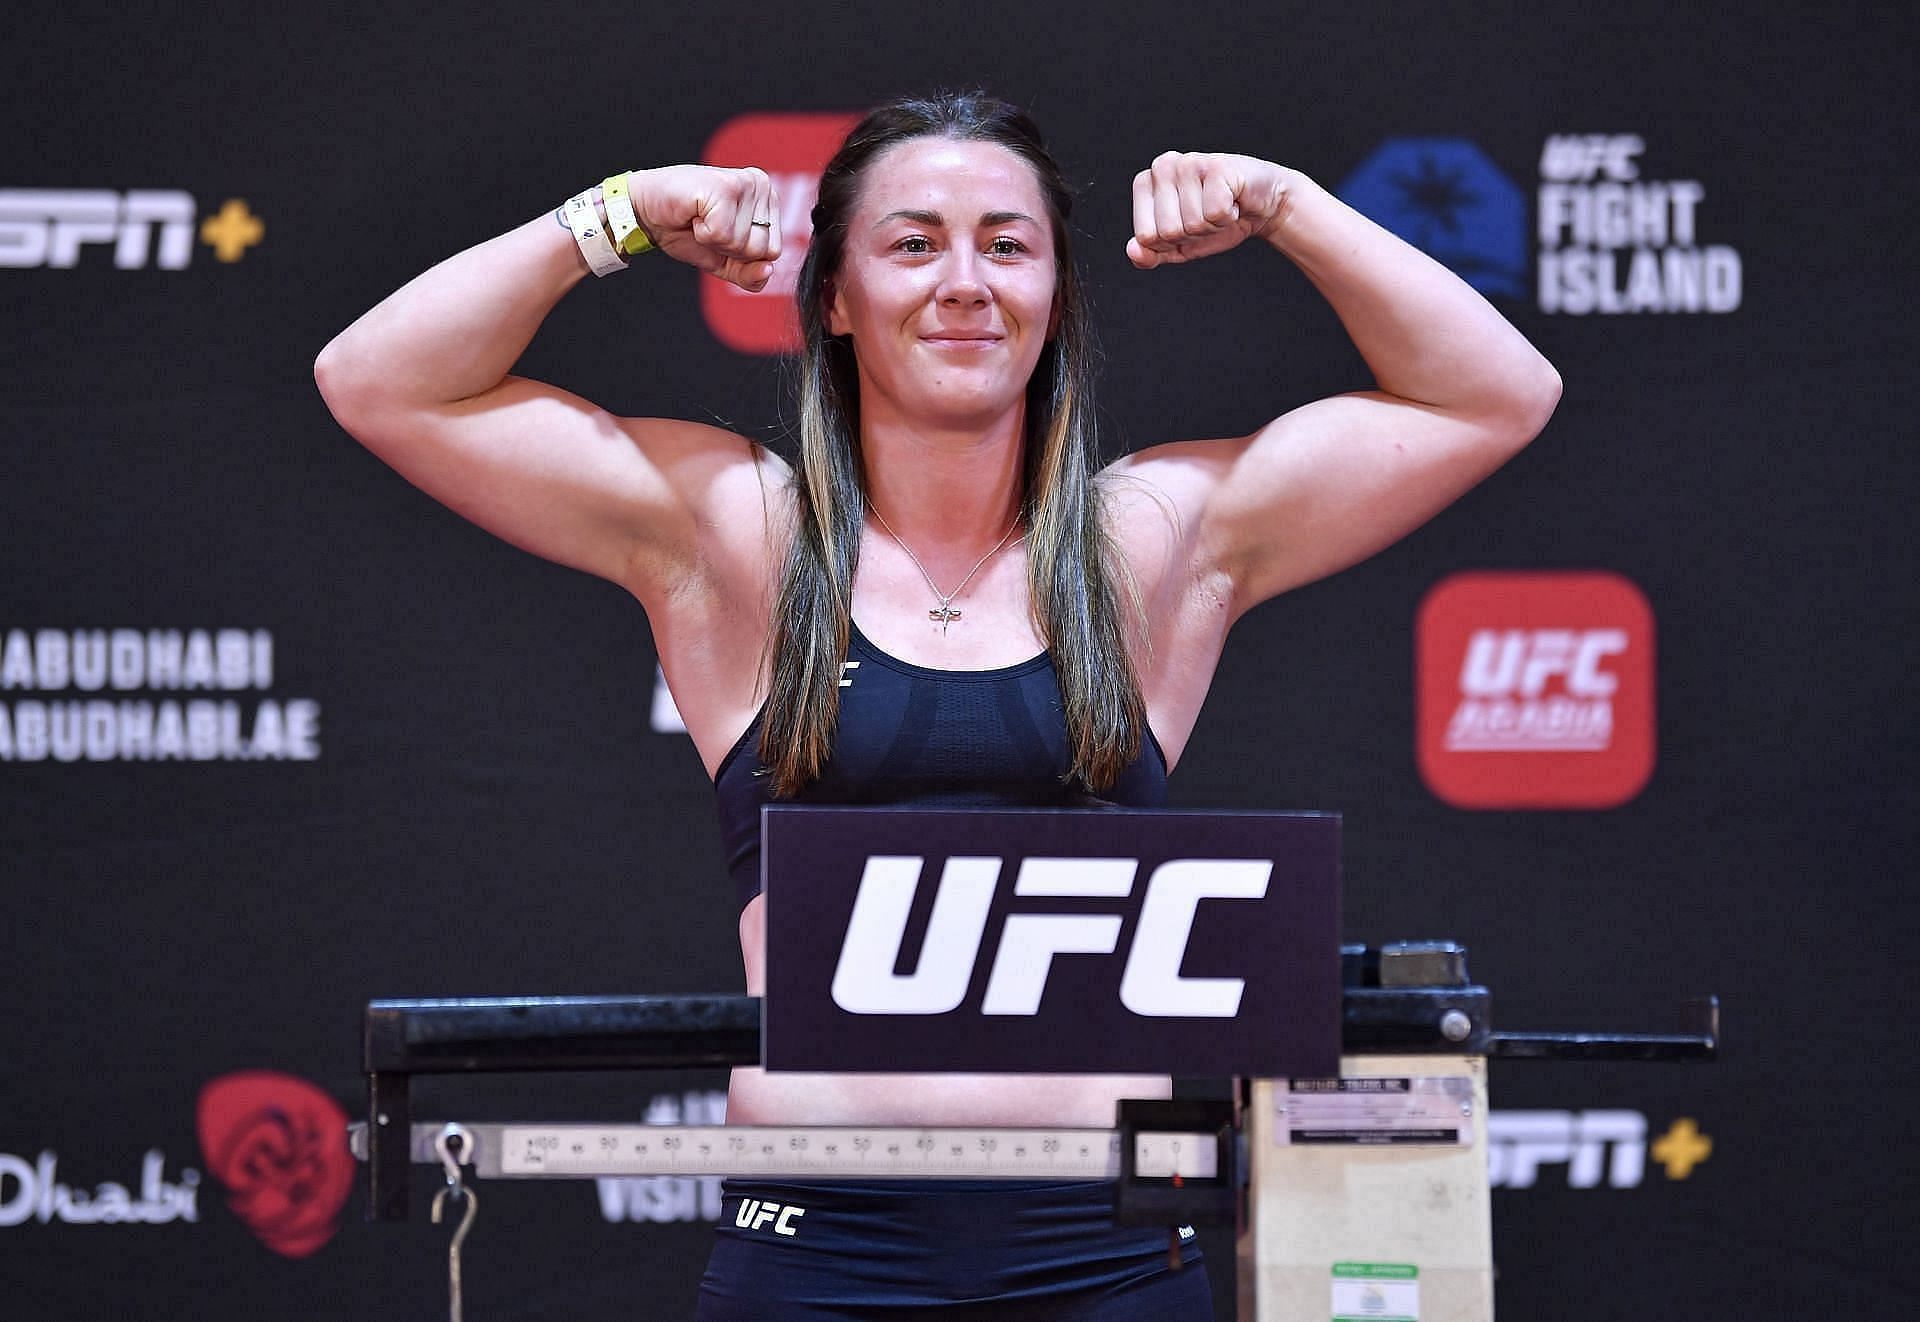 Molly McCann Next Fight: Opponent, Date, Venue